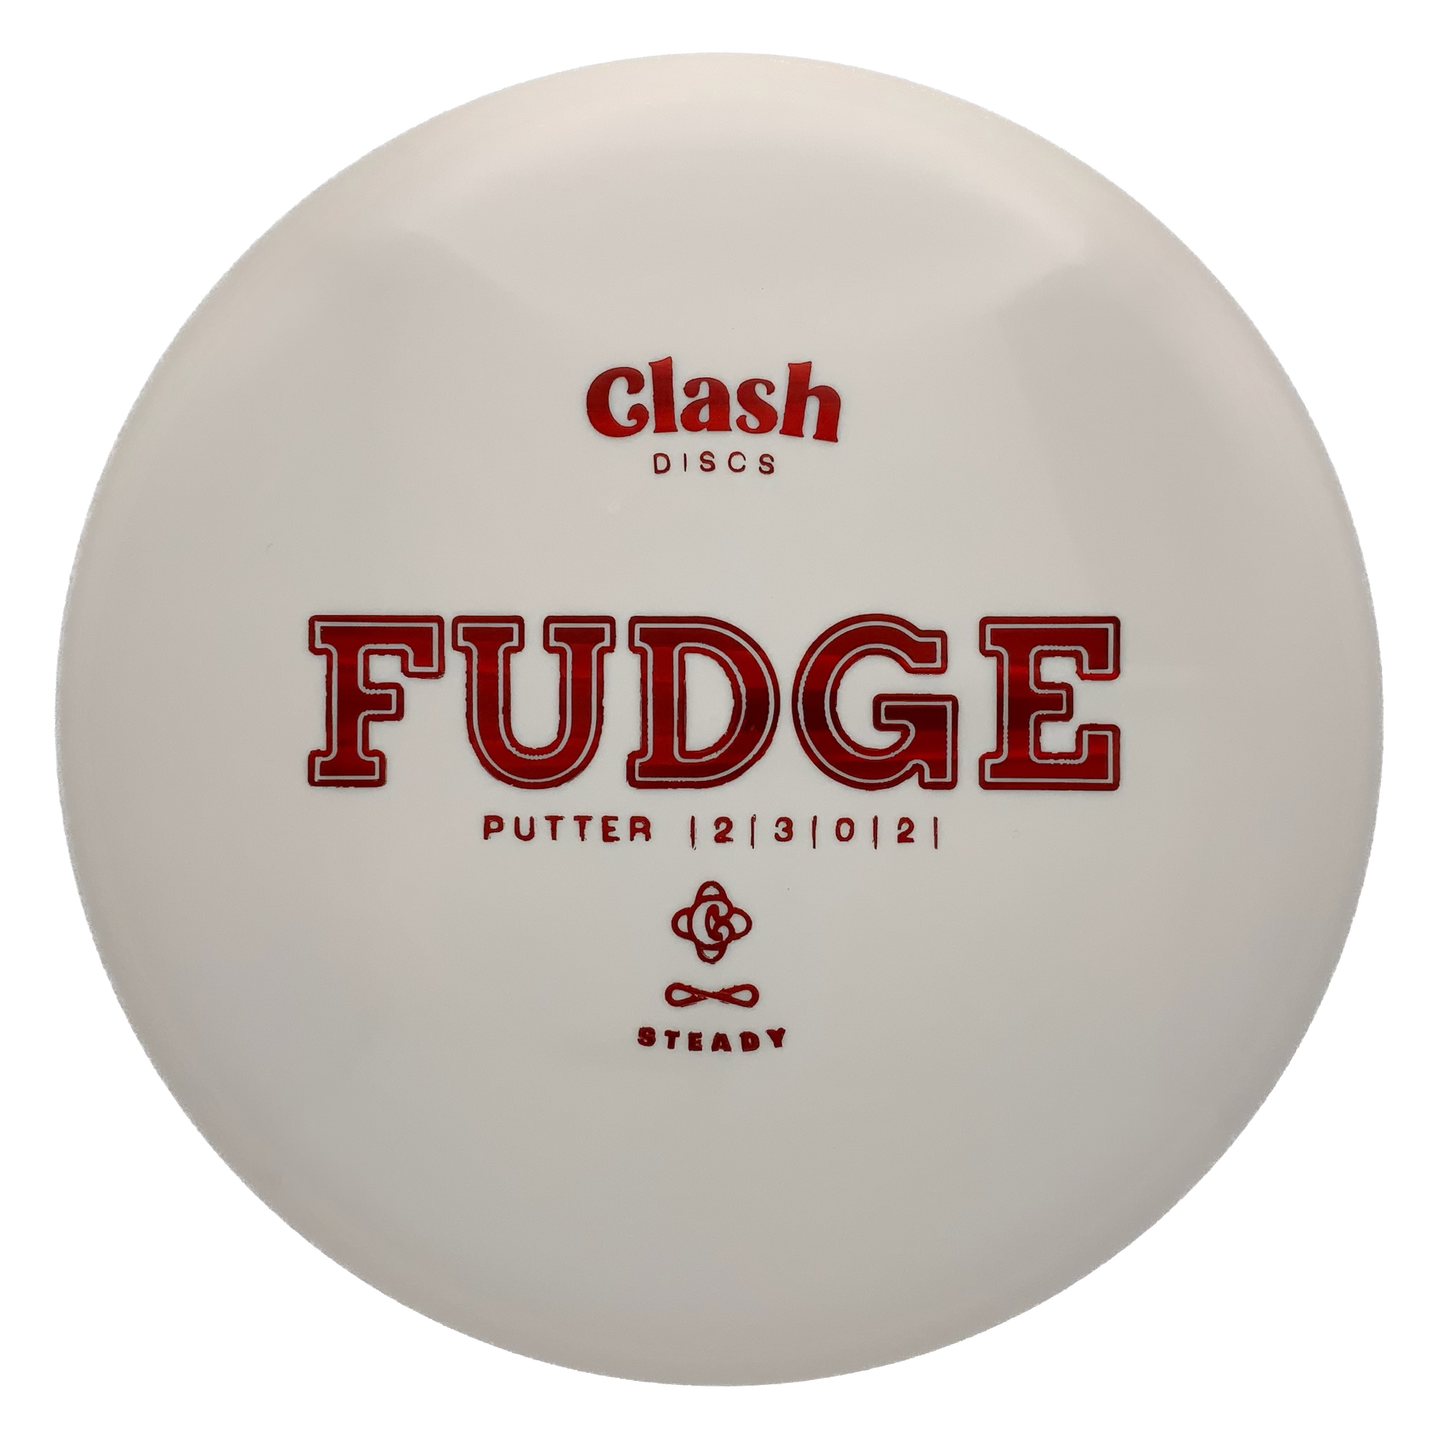 Clash Fudge - Astro Discs TX - Houston Disc Golf